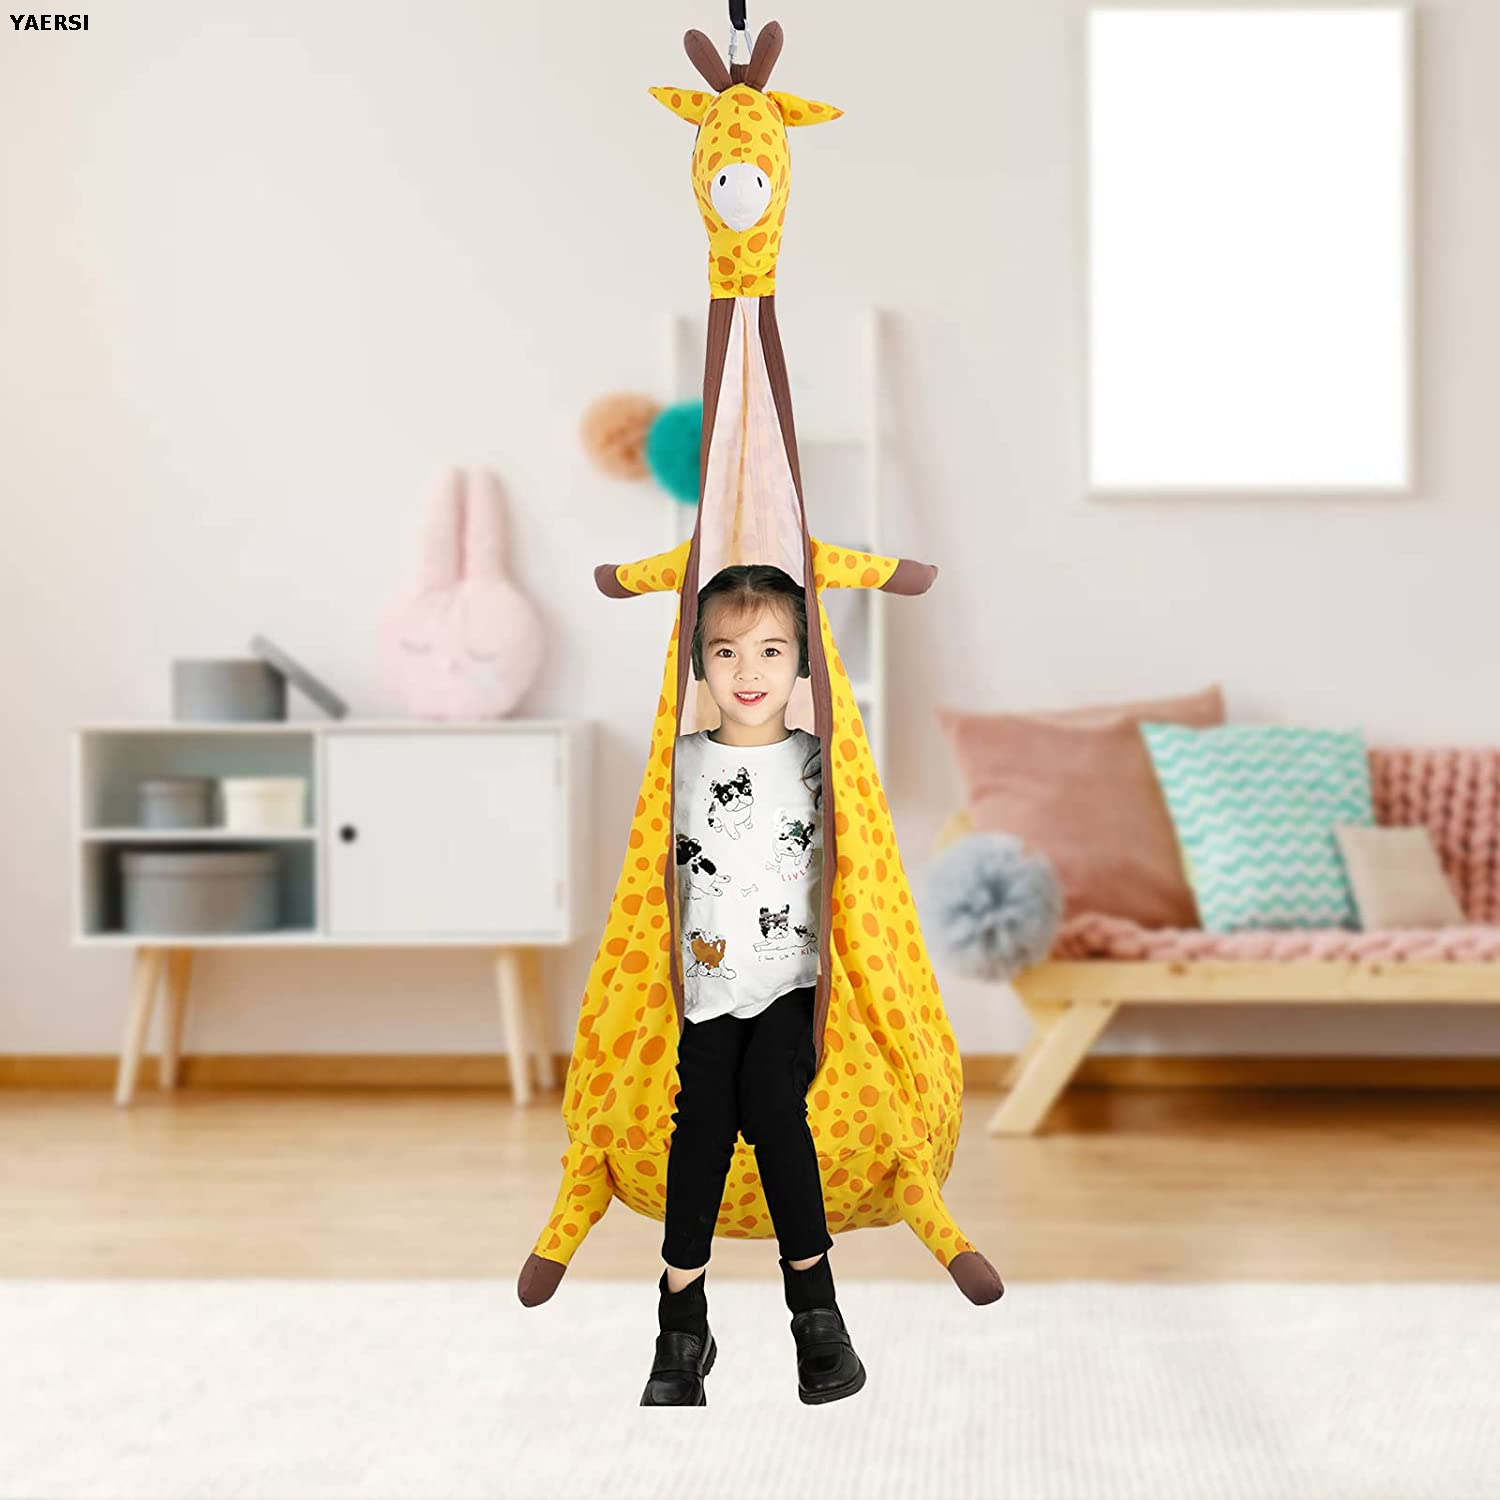 The Giraffe Design Baby Swing Chair Hanging Basket Children Safety Chair Rocking Swing Chair